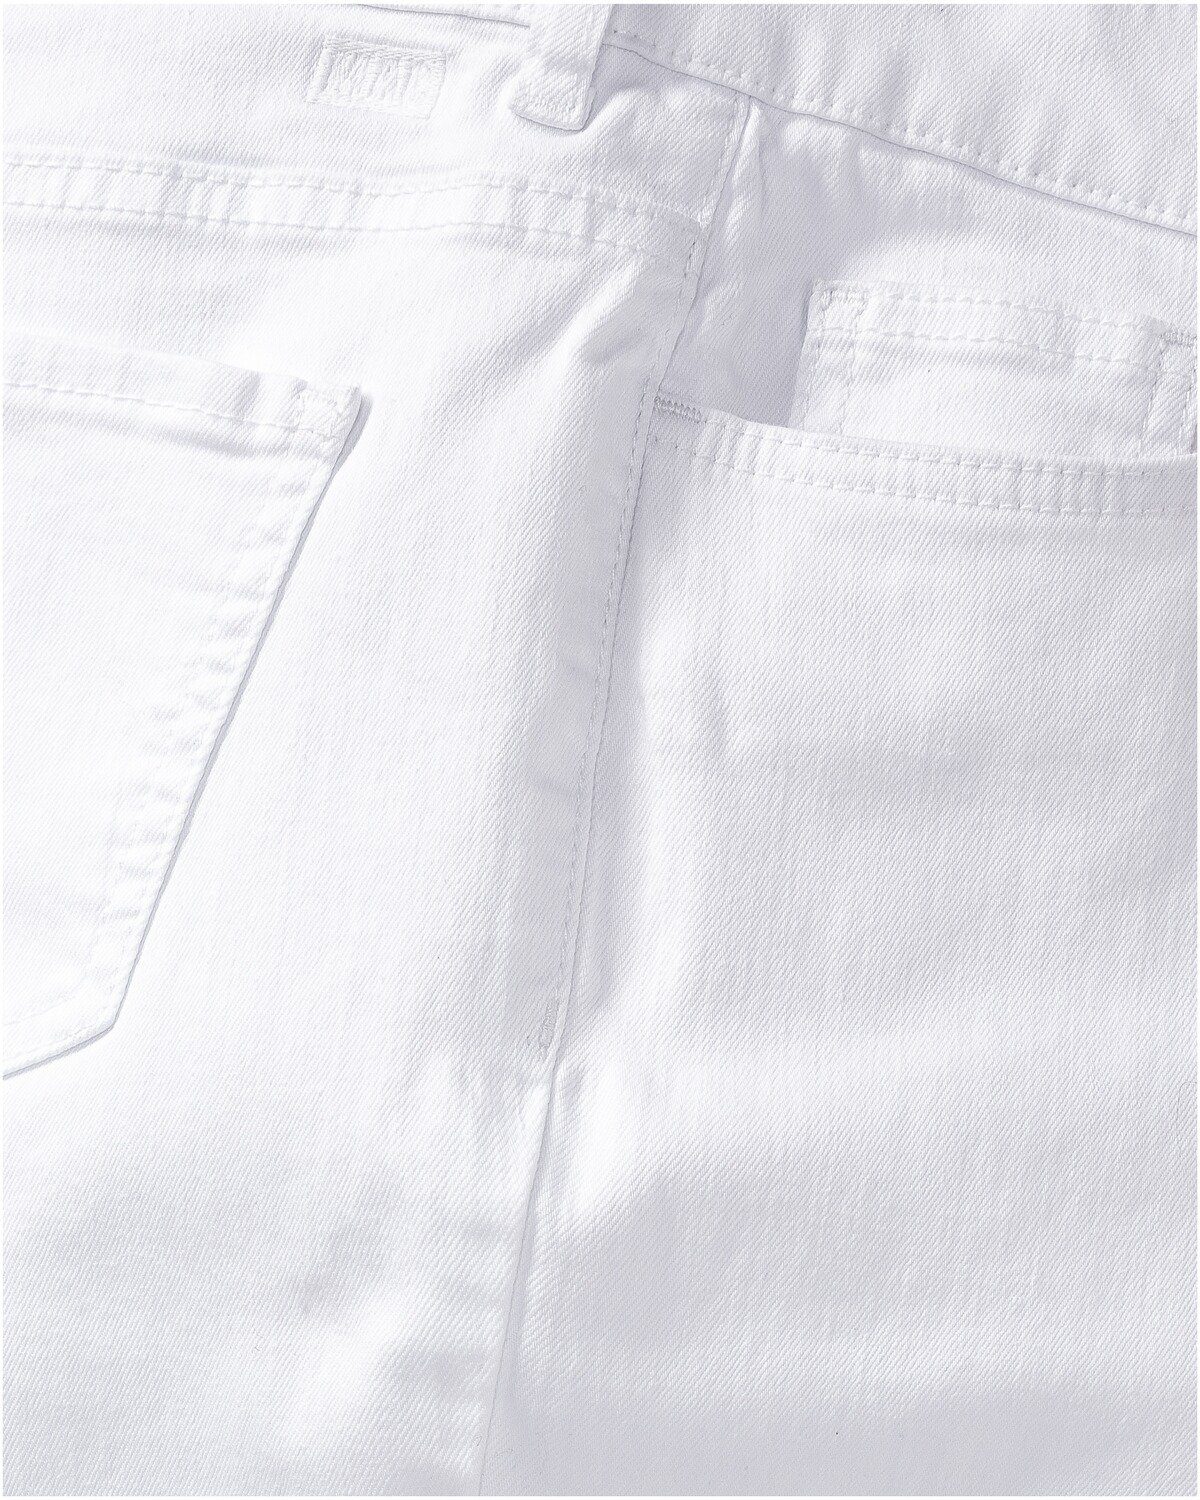 Angela 5-Pocket-Jeans Weiß/L30 Jeans MAC Pipe